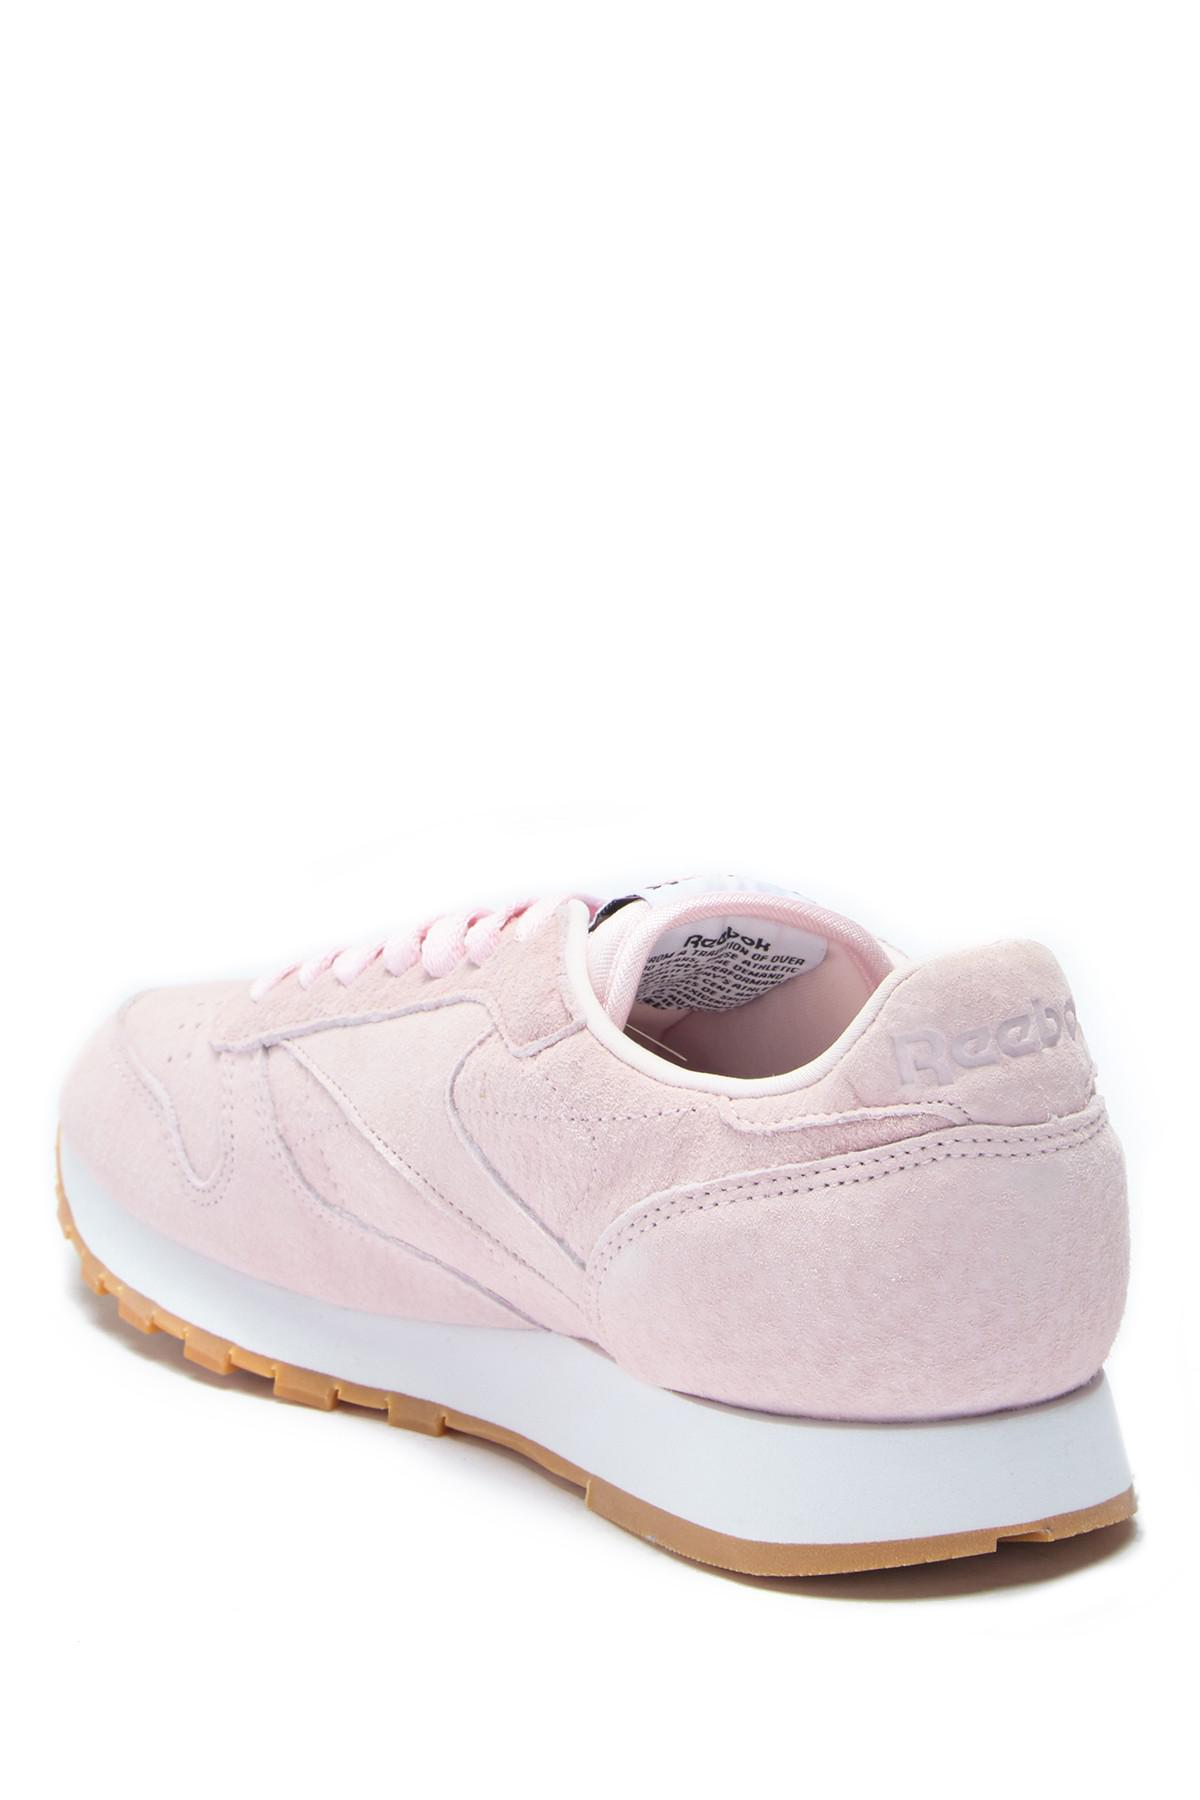 Reebok Classic Suede Pastel Emk Sneaker in Pink for Men - Lyst